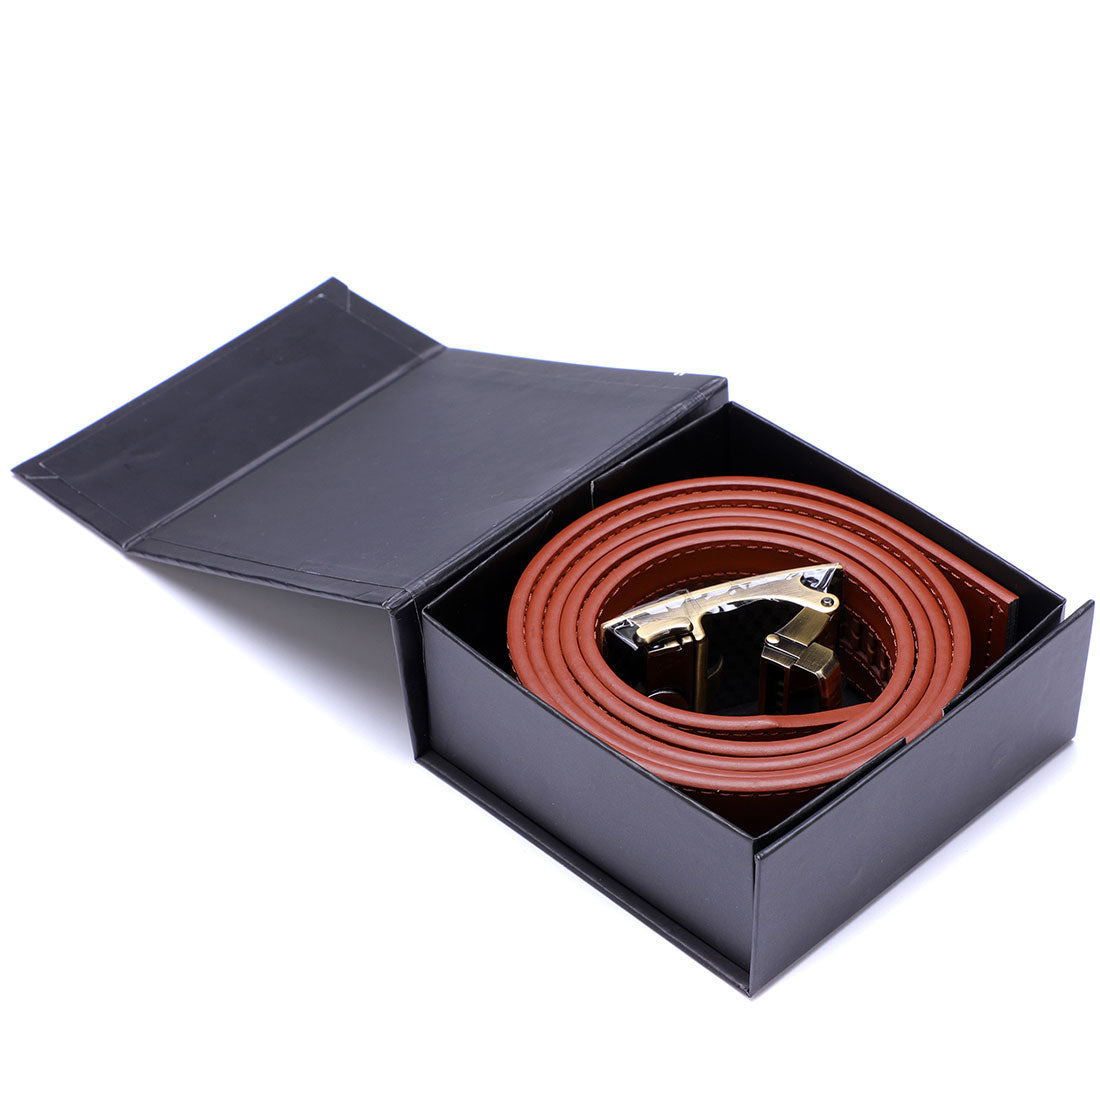 Genuine Solid Leather Micro-Ratchet Belt | Steel Brass Buckle | Tan Strap - Tie, bowtie, pocket square  | Kissties